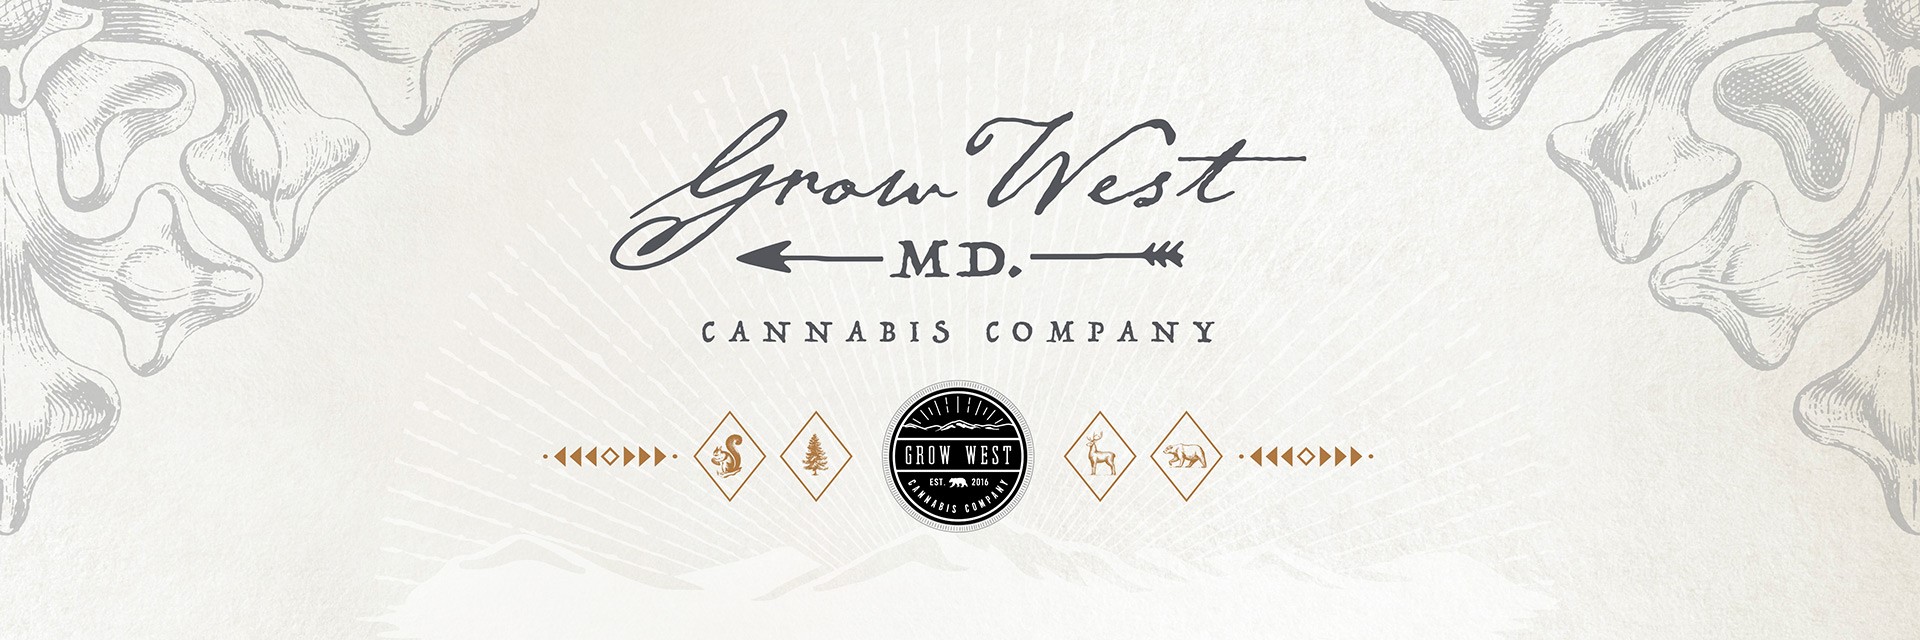 Grow West Cannabis Co – Cumberland, MD